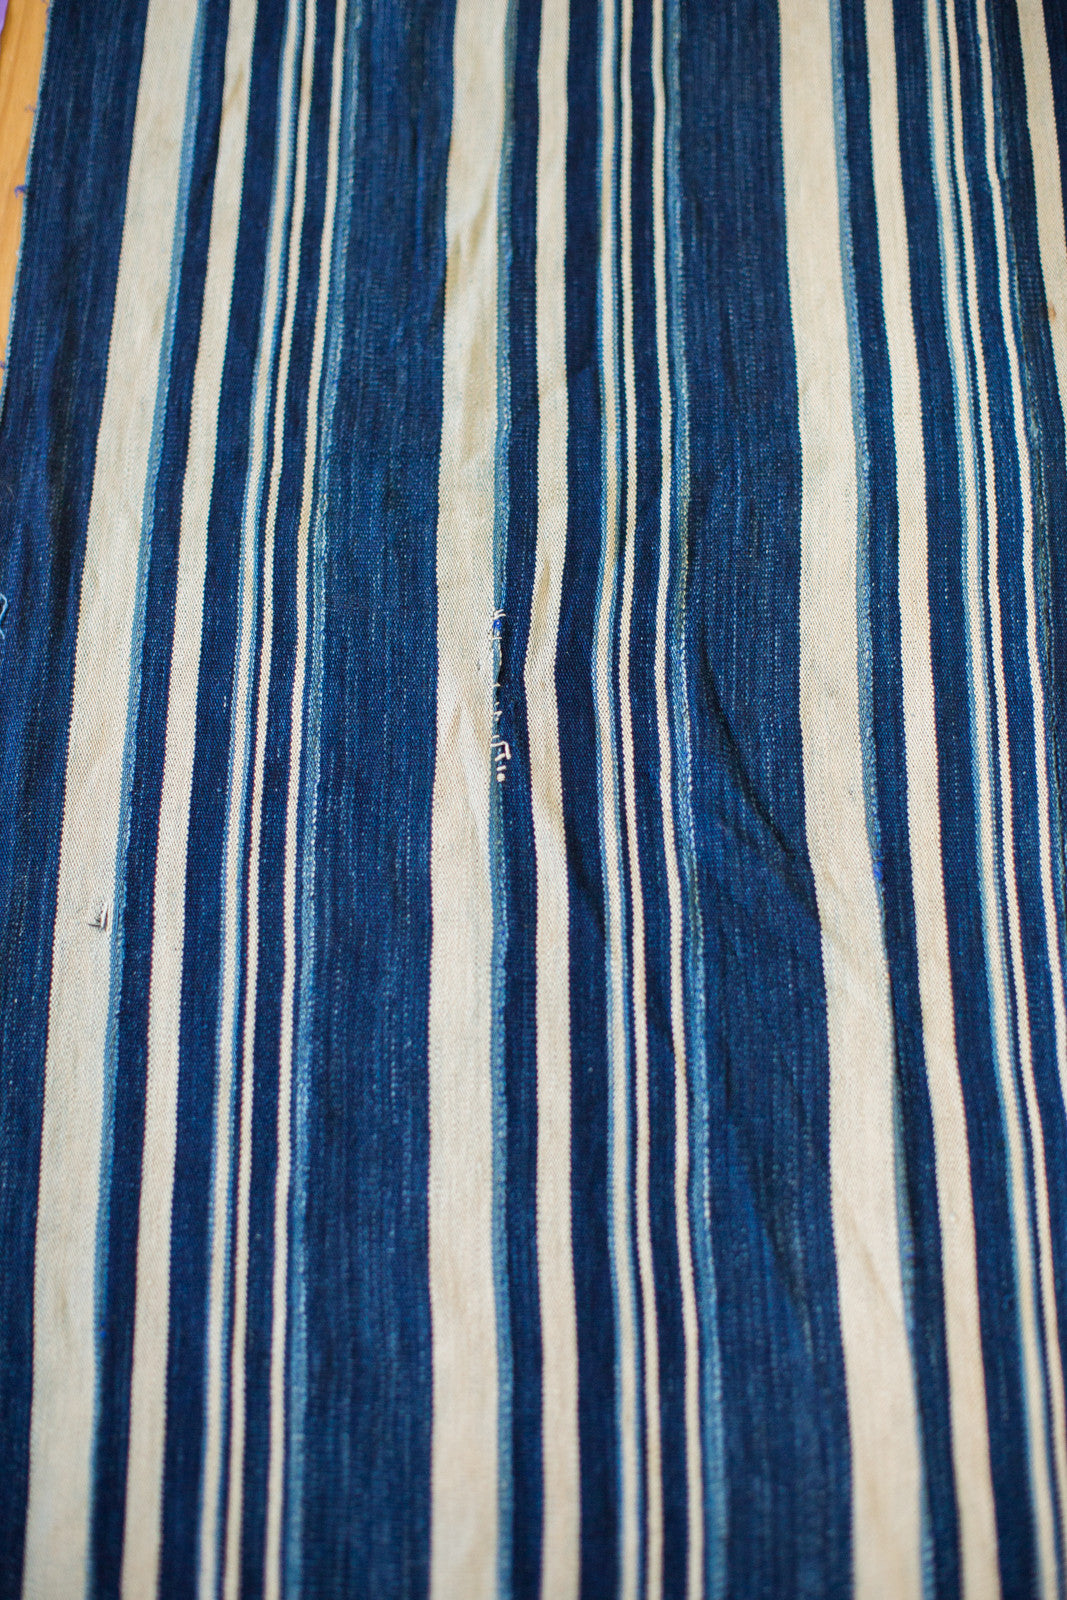 3.5x4.5 Indigo Blue Striped Textile